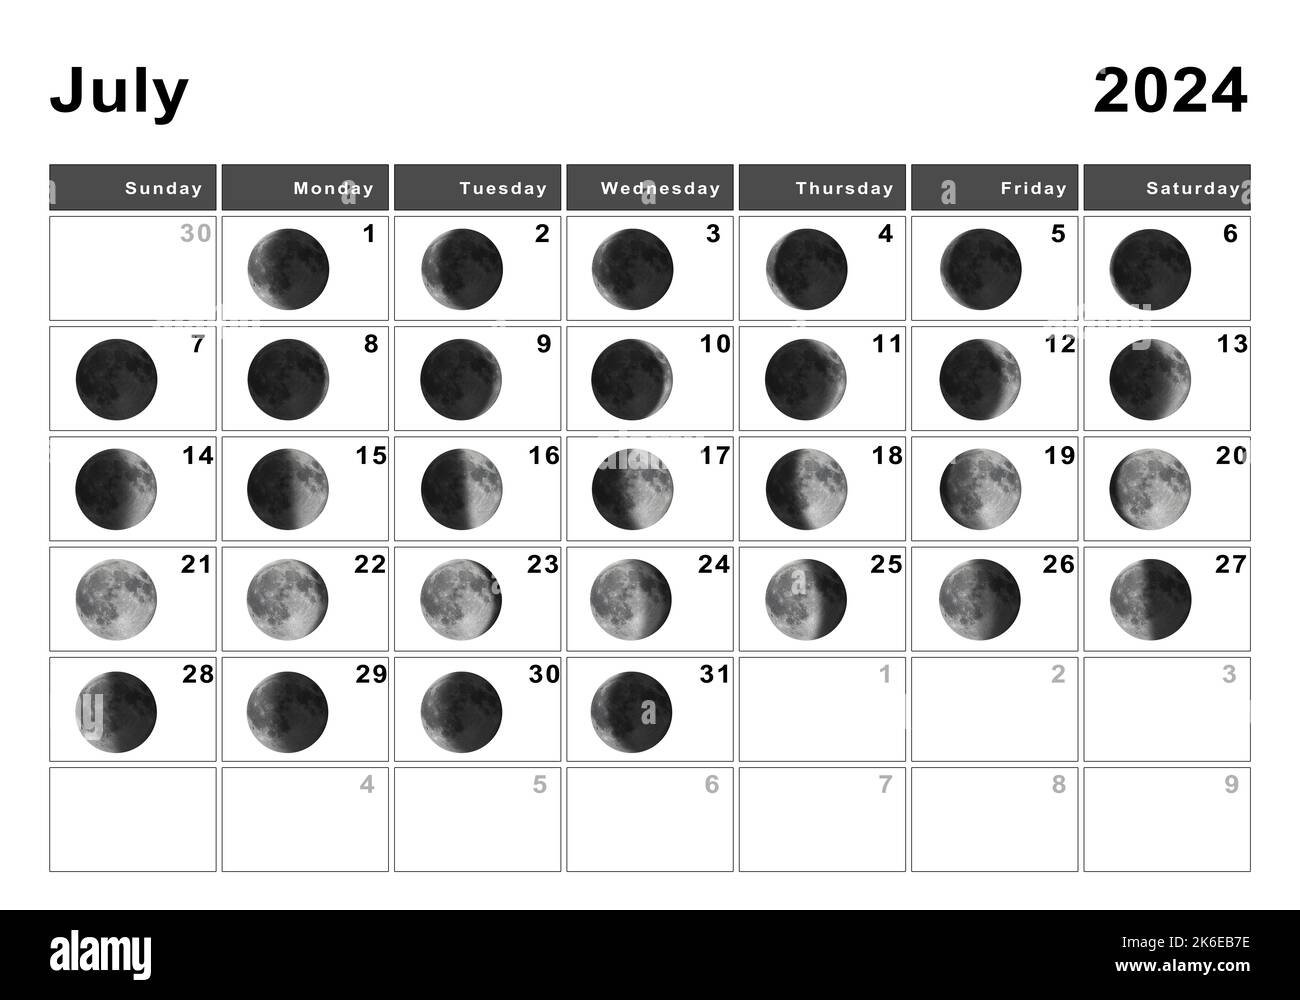 July 2024 Lunar Calendar, Moon Cycles, Moon Phases Stock Photo - Alamy | July Calendar With Moon Phases 2024